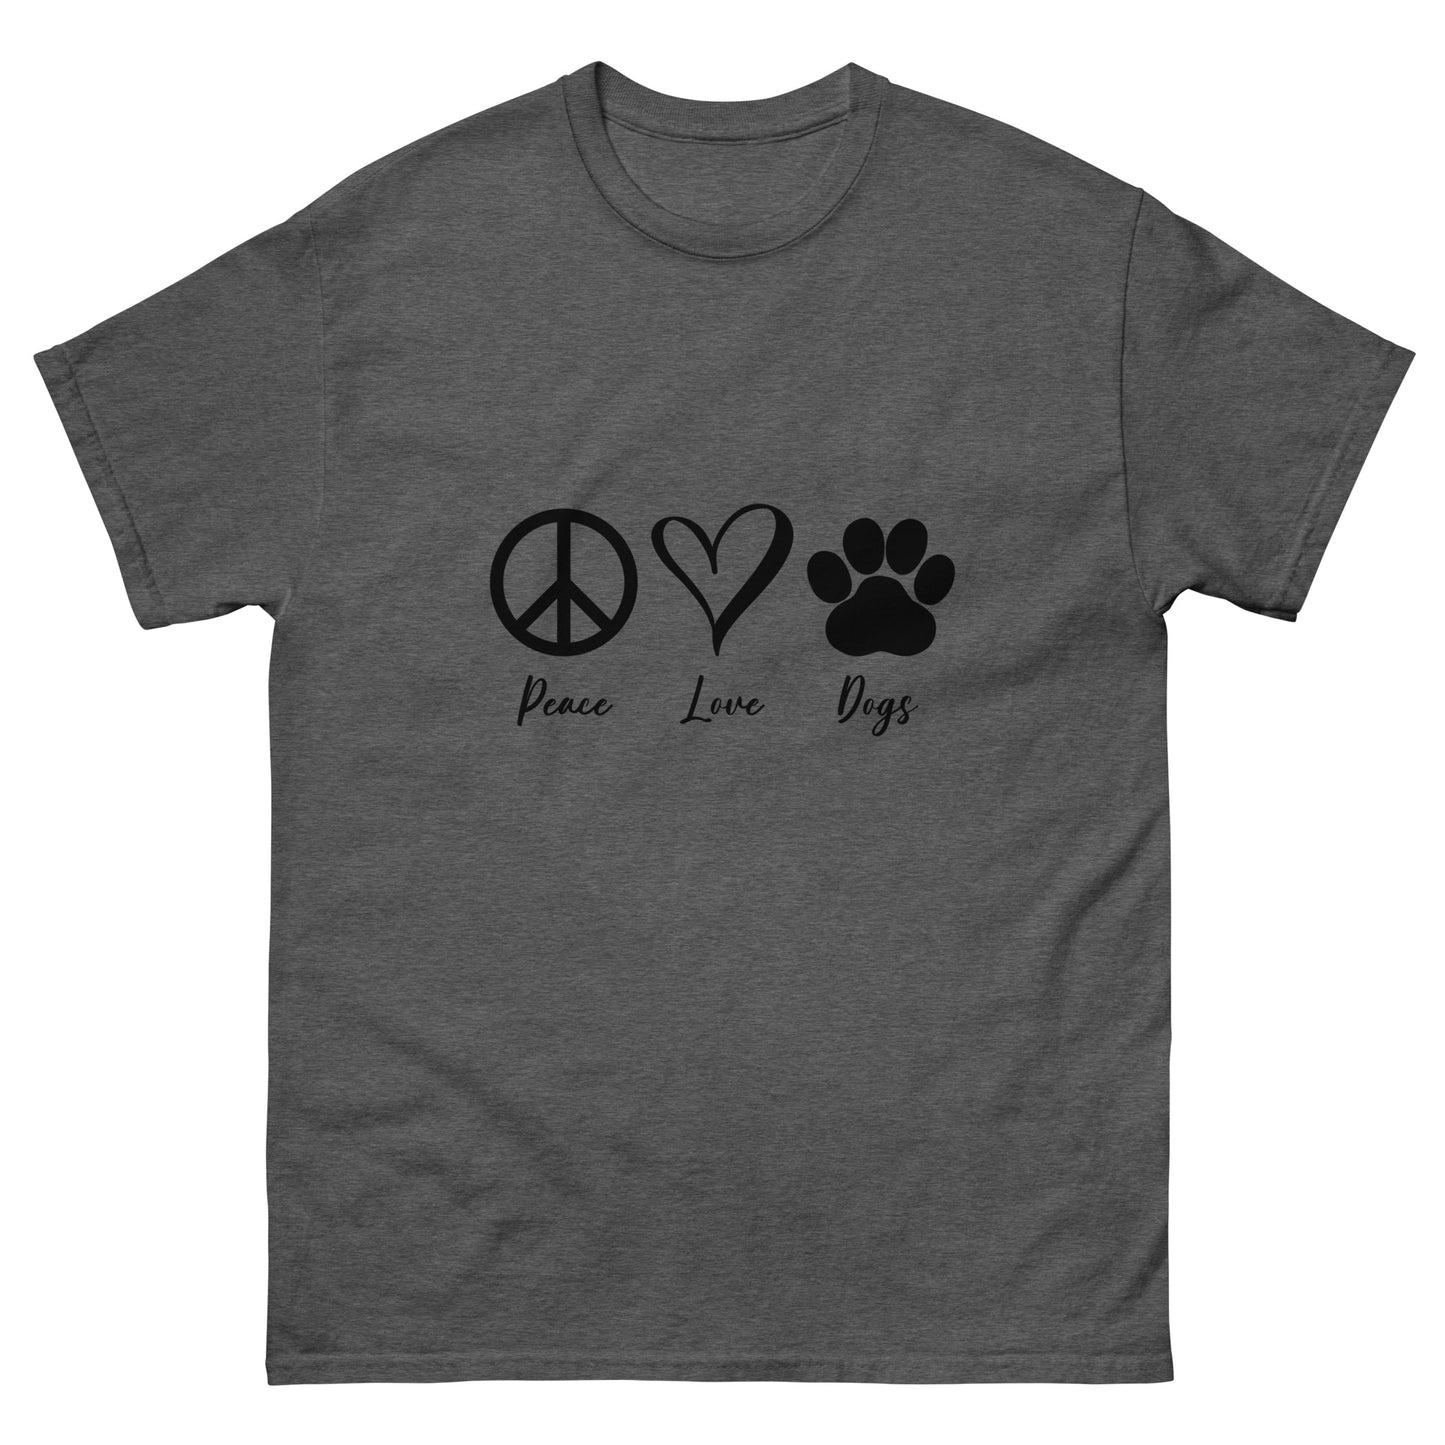 Peace Love Dogs - classic tee